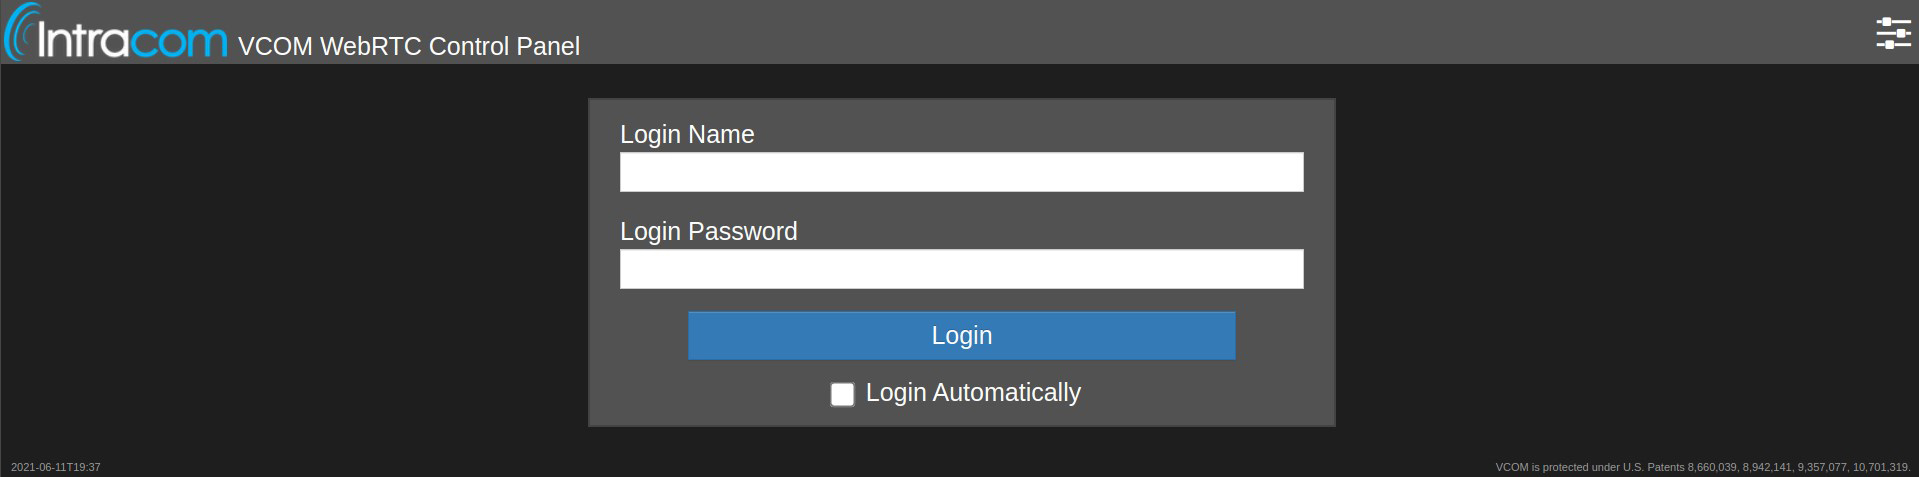 screenshot of vcom control panel login menu